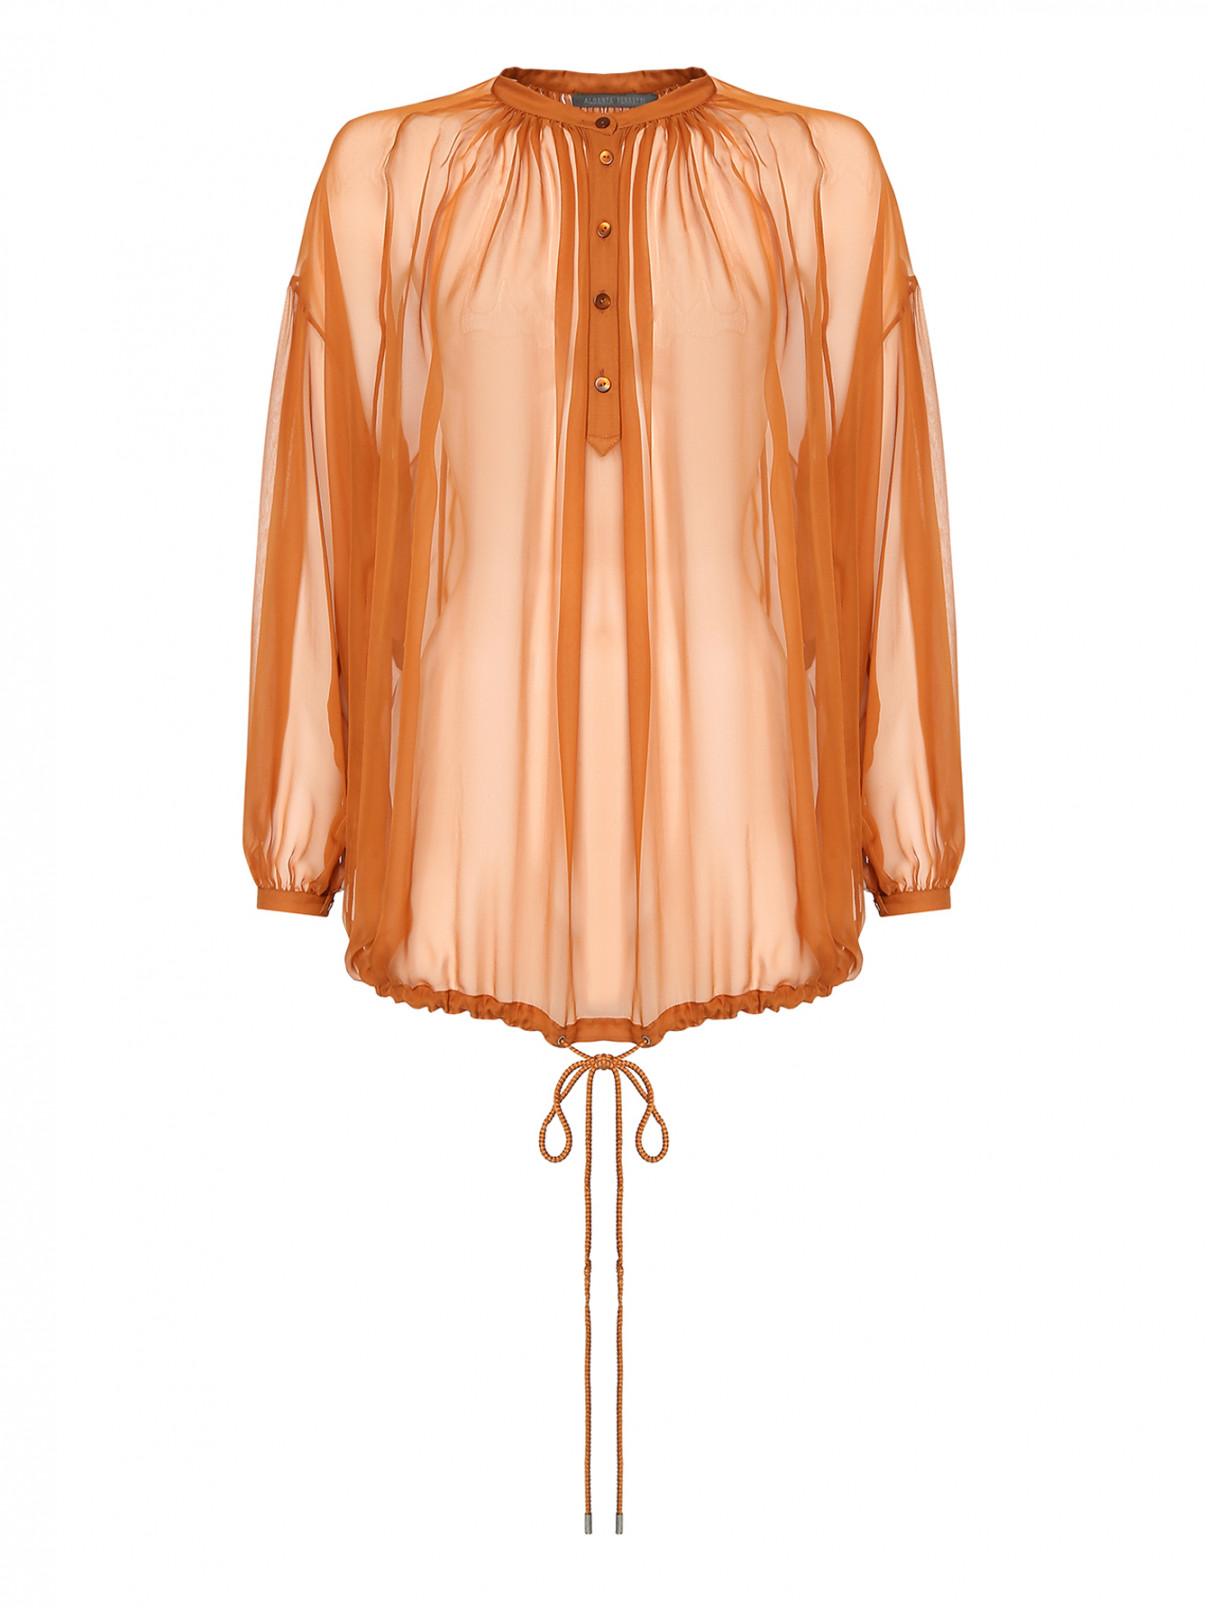 Блуза из шелка, со сборкой Alberta Ferretti  –  Общий вид  – Цвет:  Оранжевый